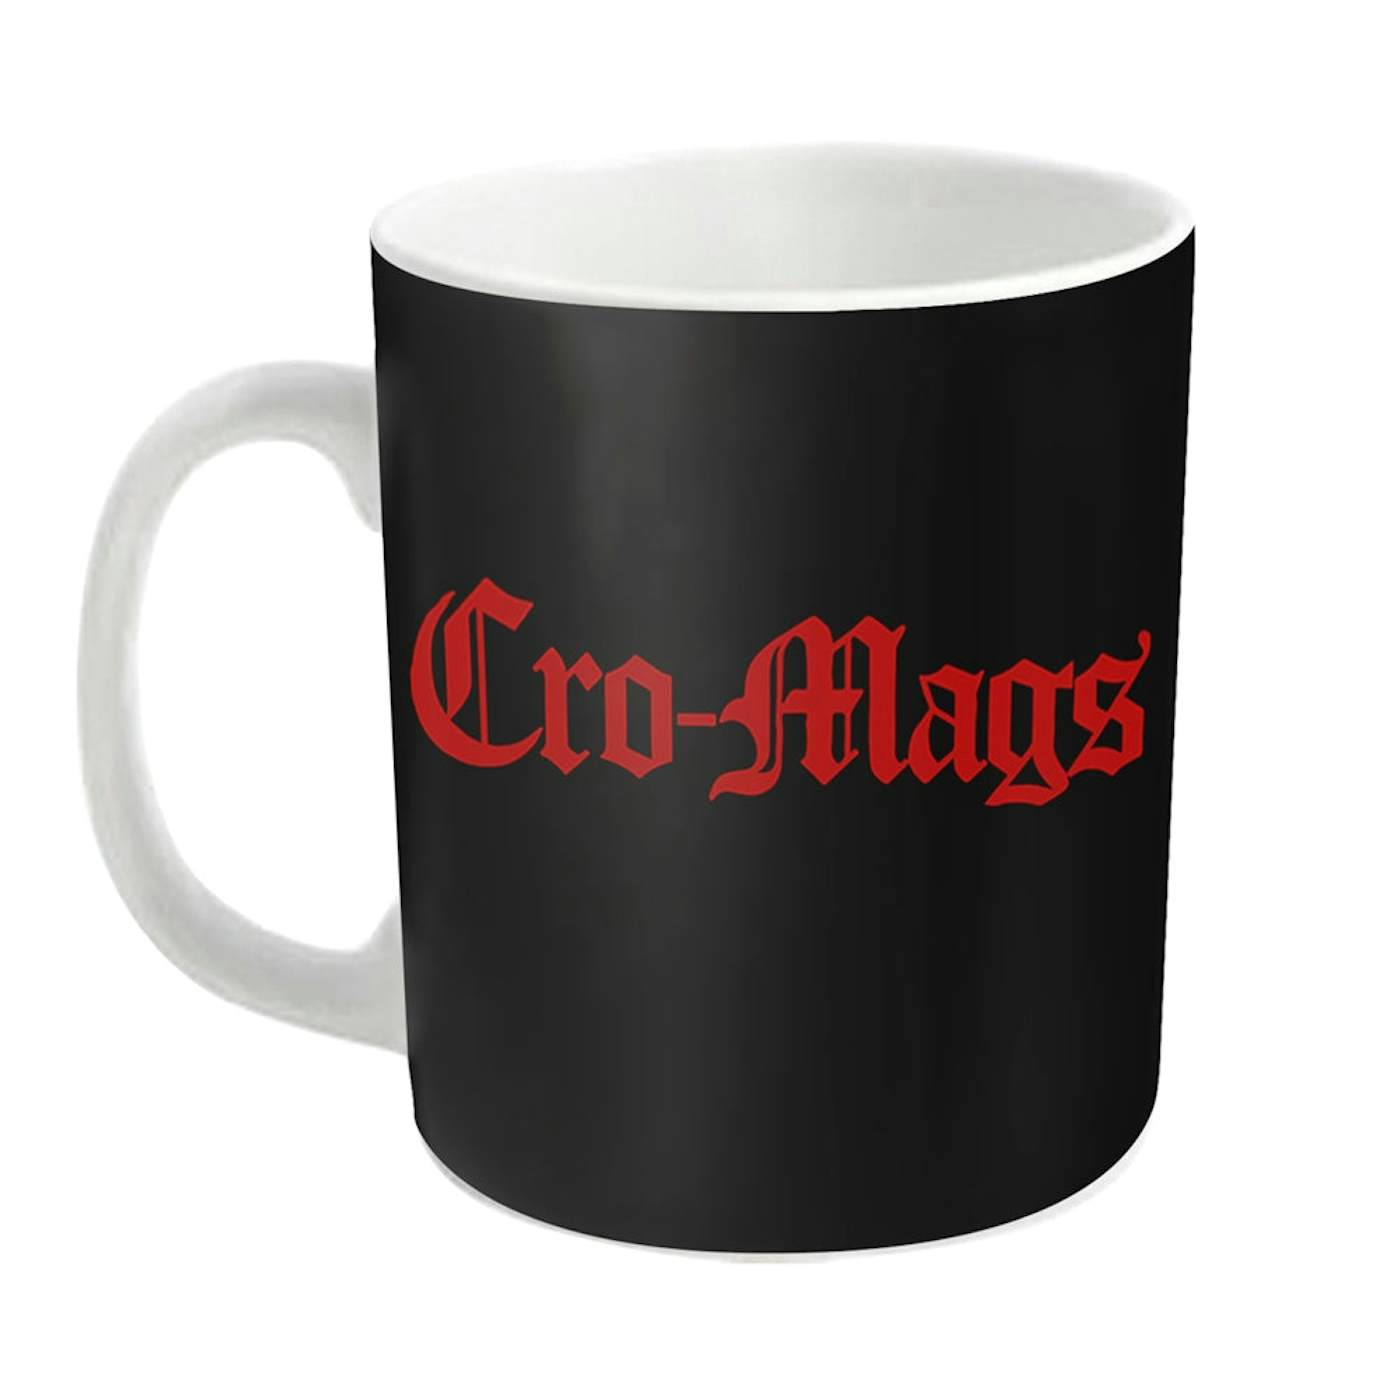 Cro-Mags Mug - Logo